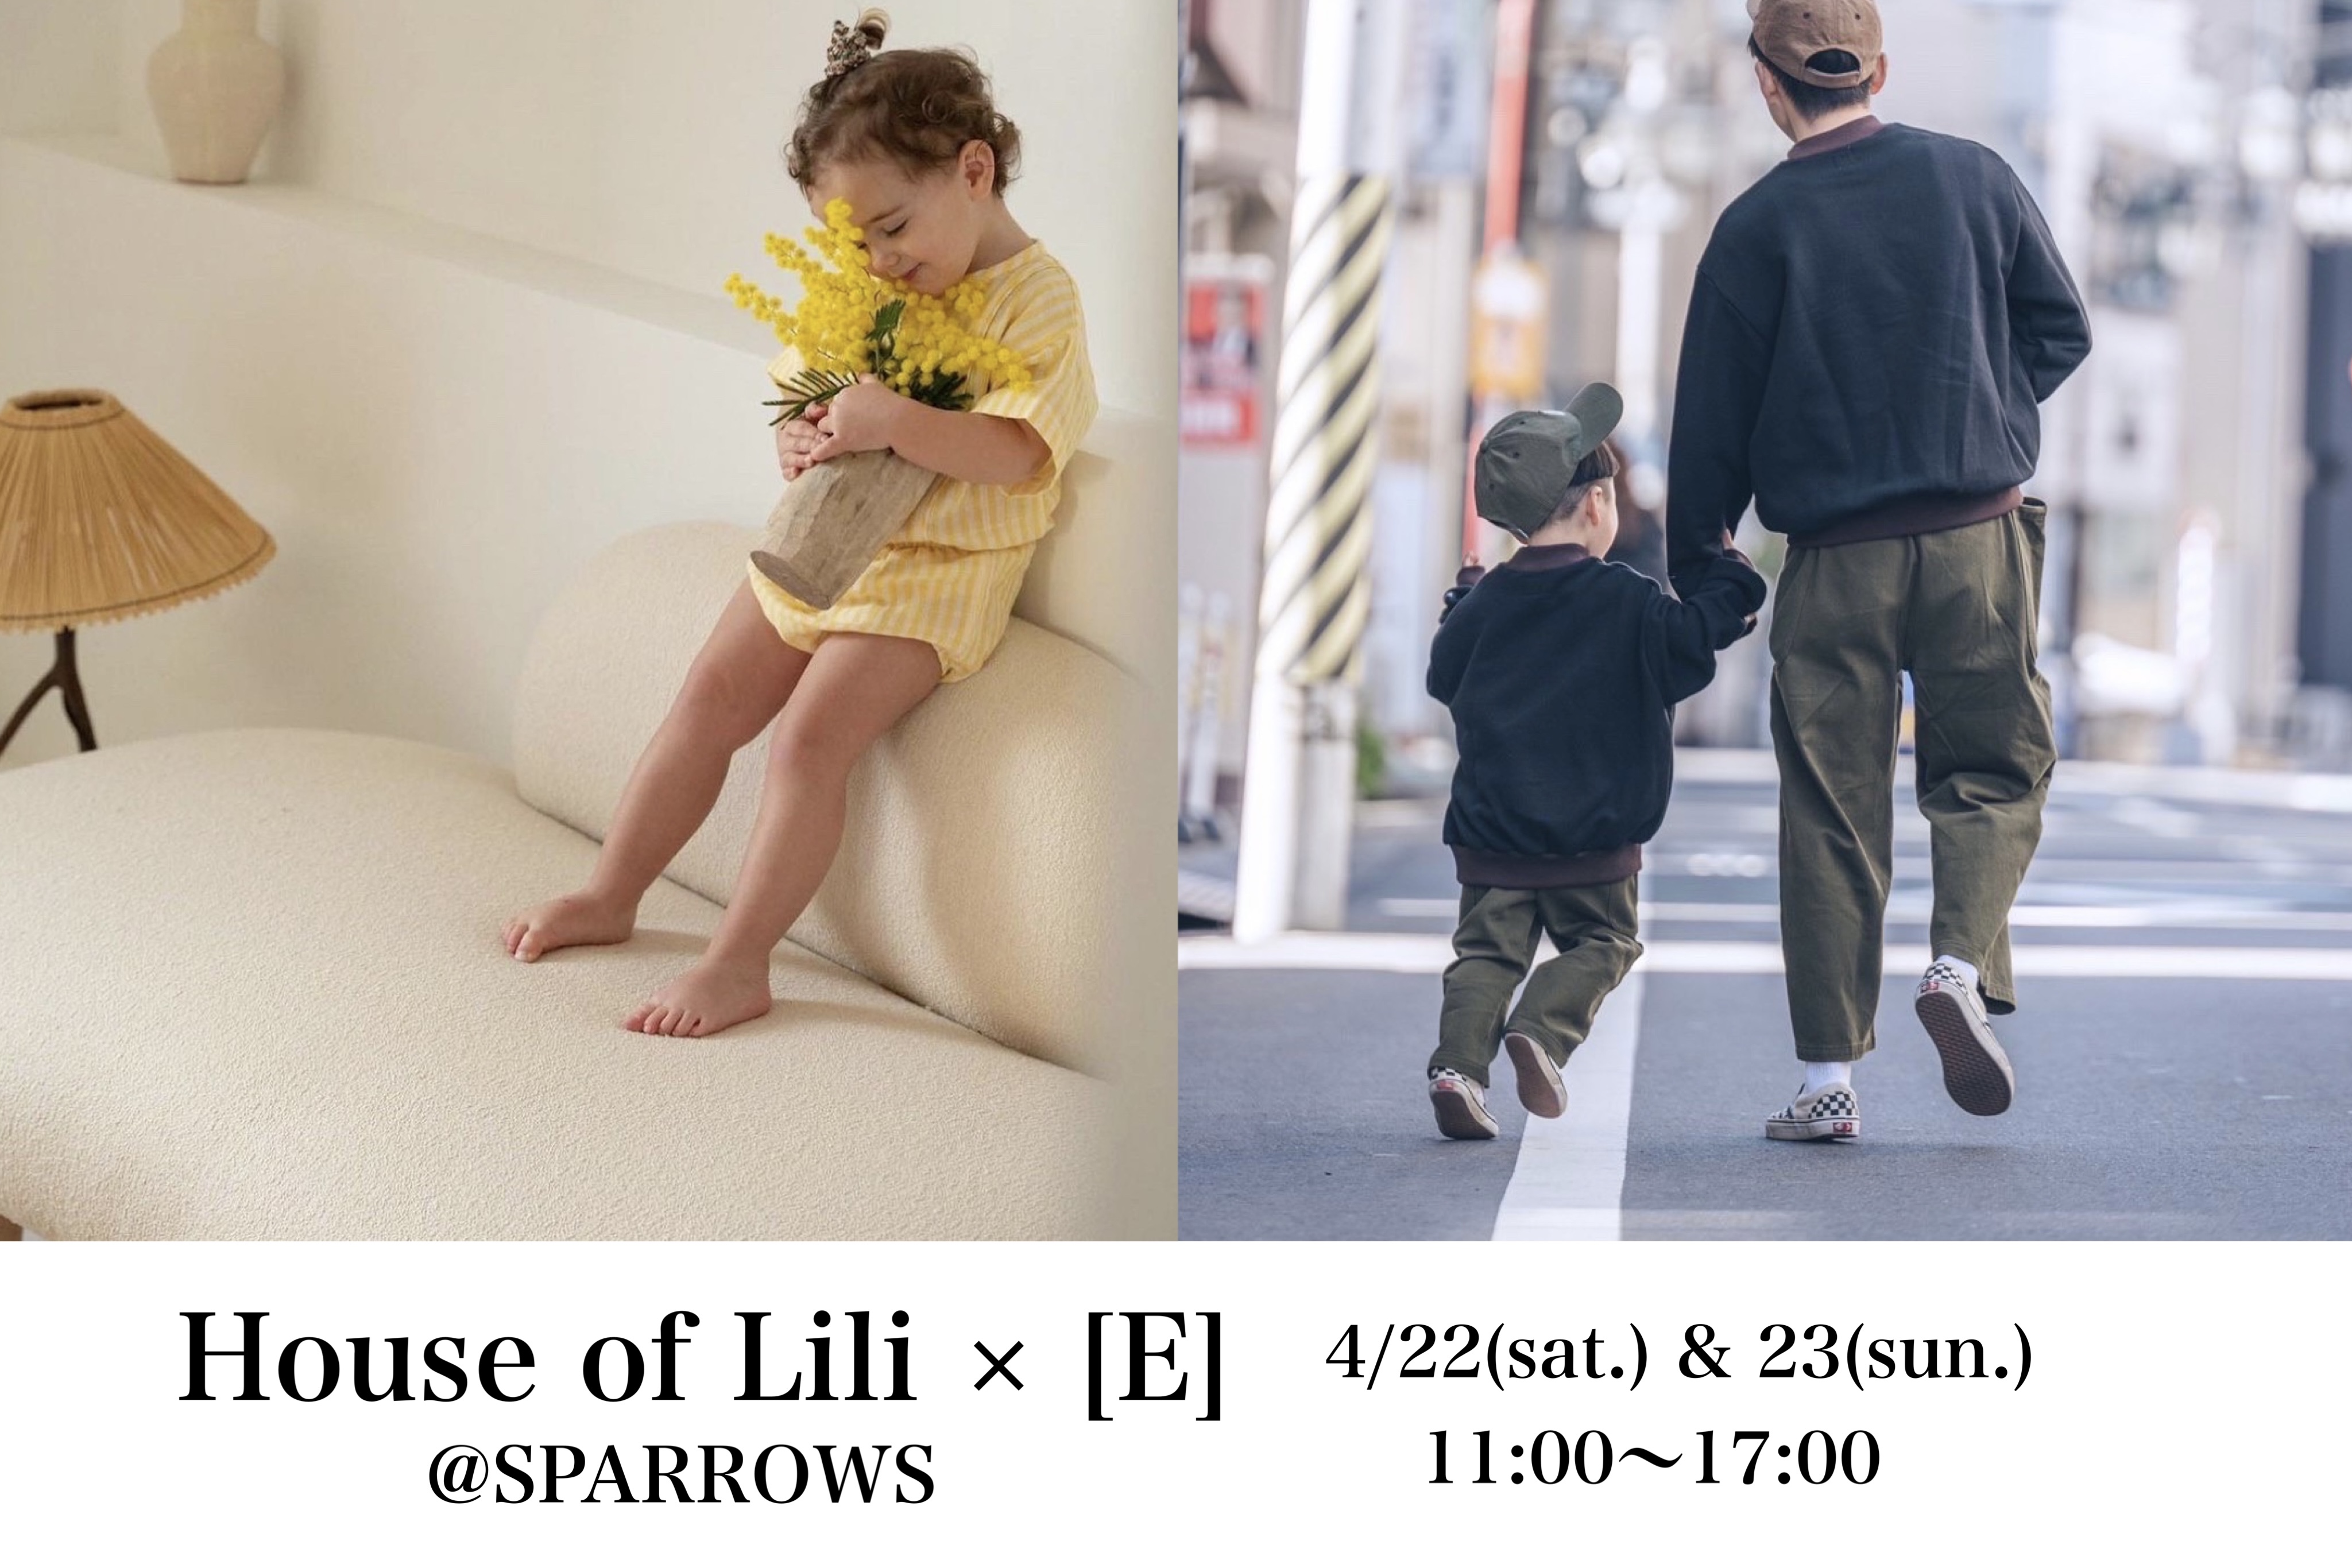 4/22(sat.)&23(sun.) House of Lili ×【E】popup event